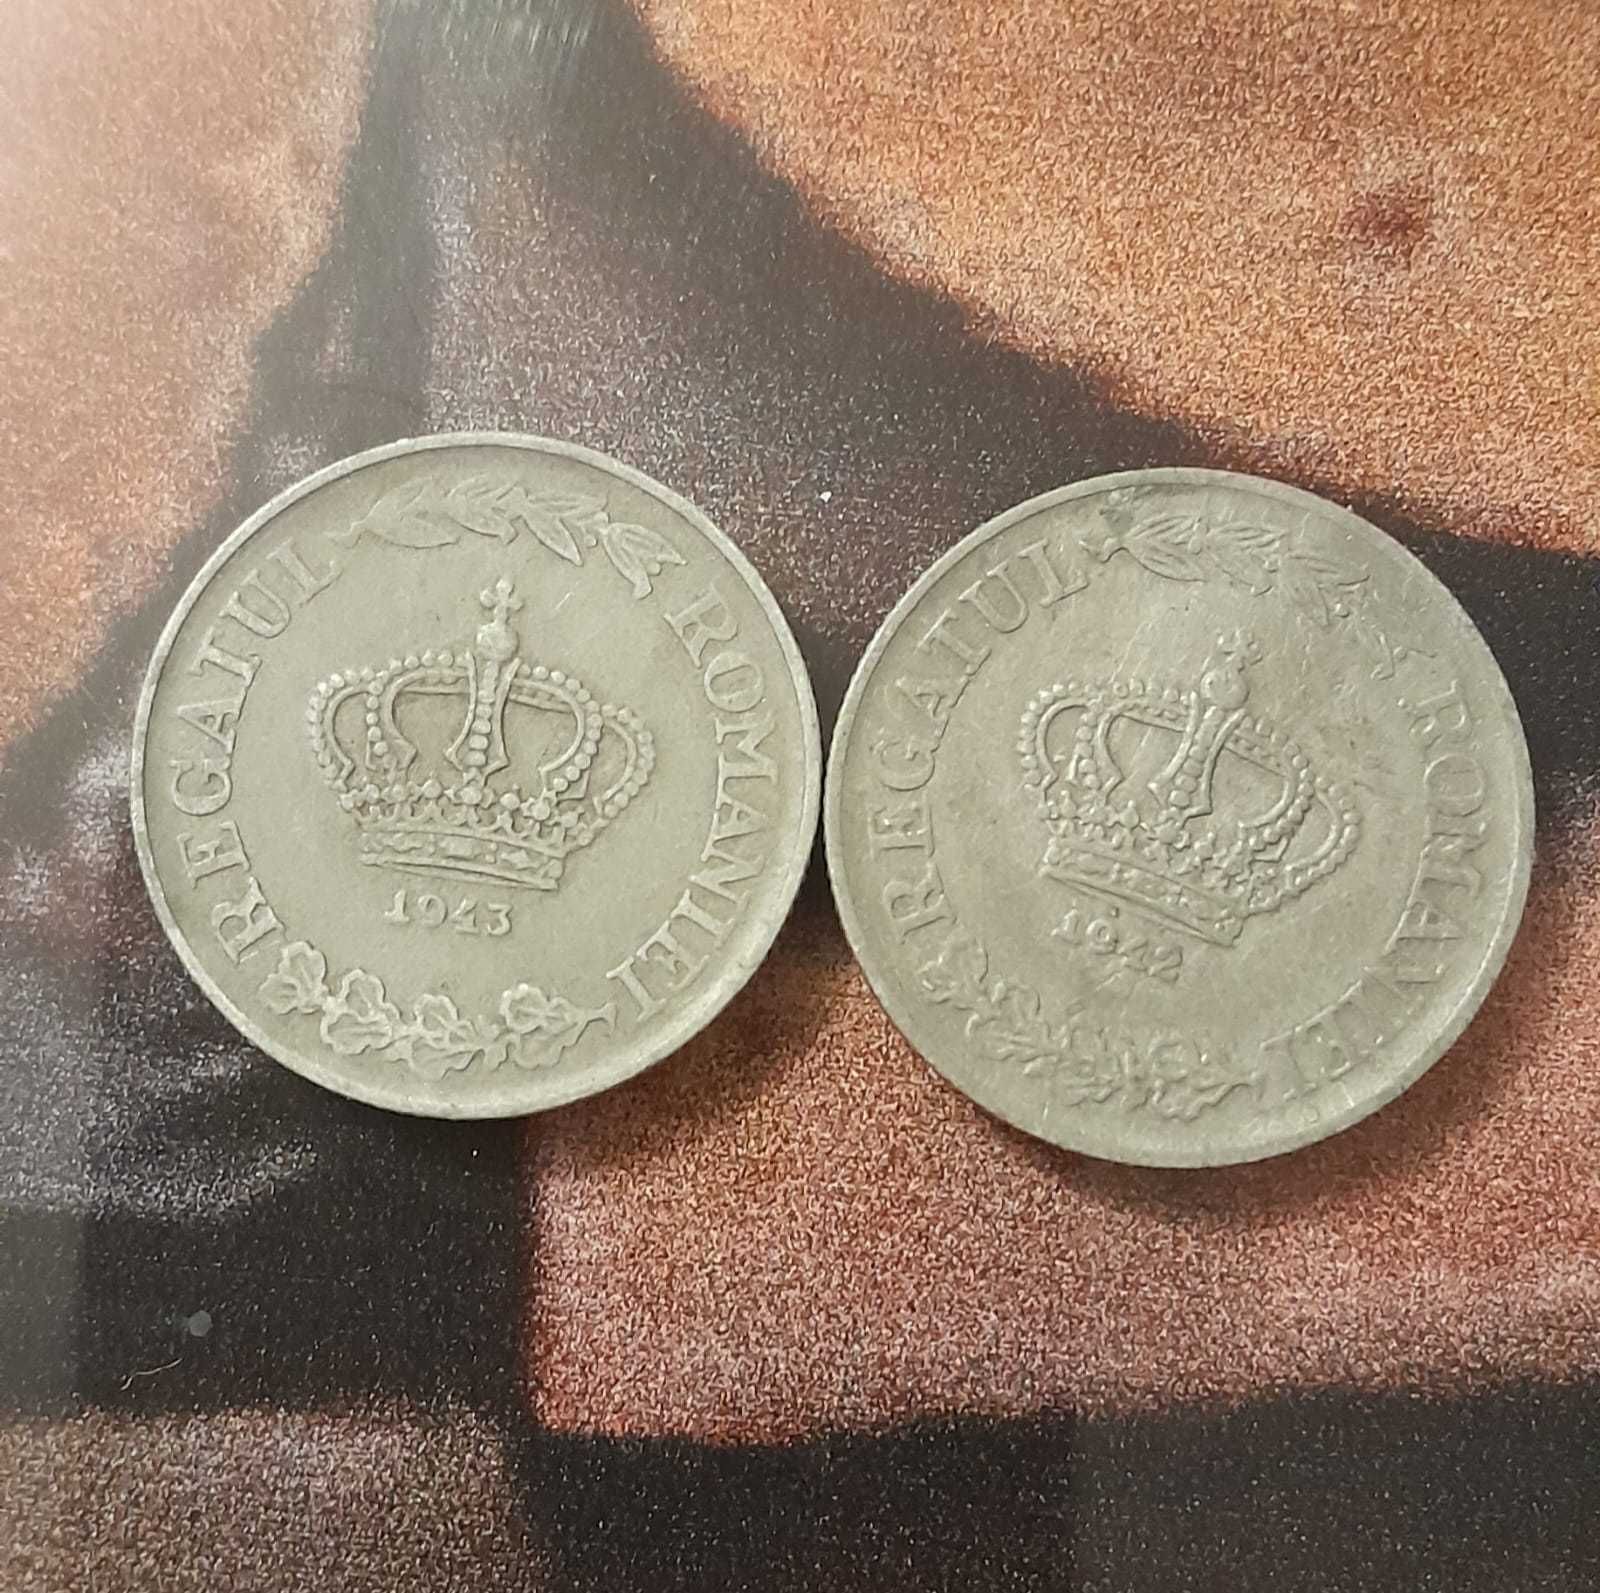 Lot 13 monede colectie RO fara dubluri stare excelentă pret total